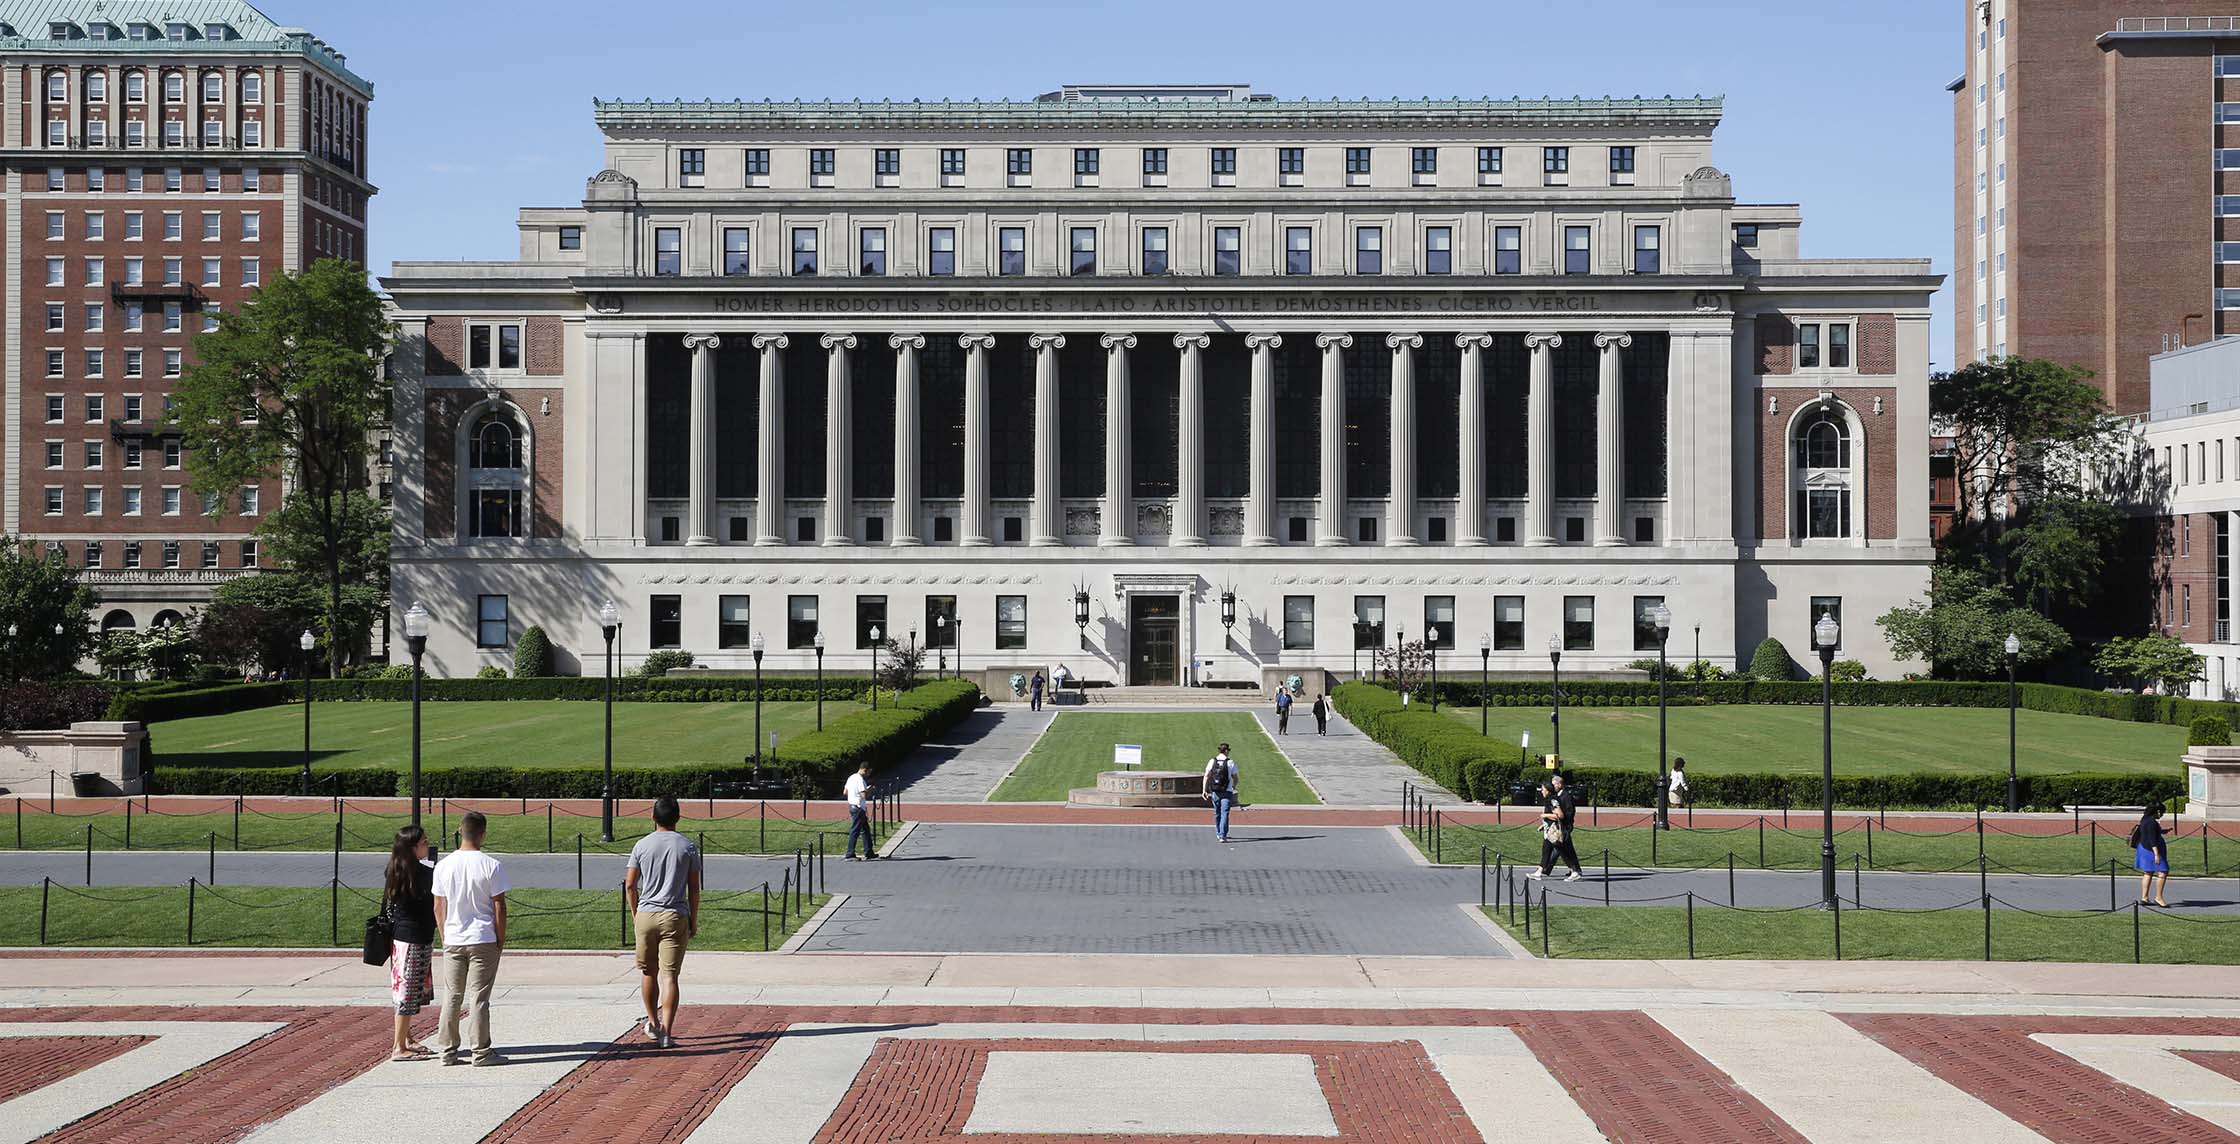 University of Columbia [Image Source]